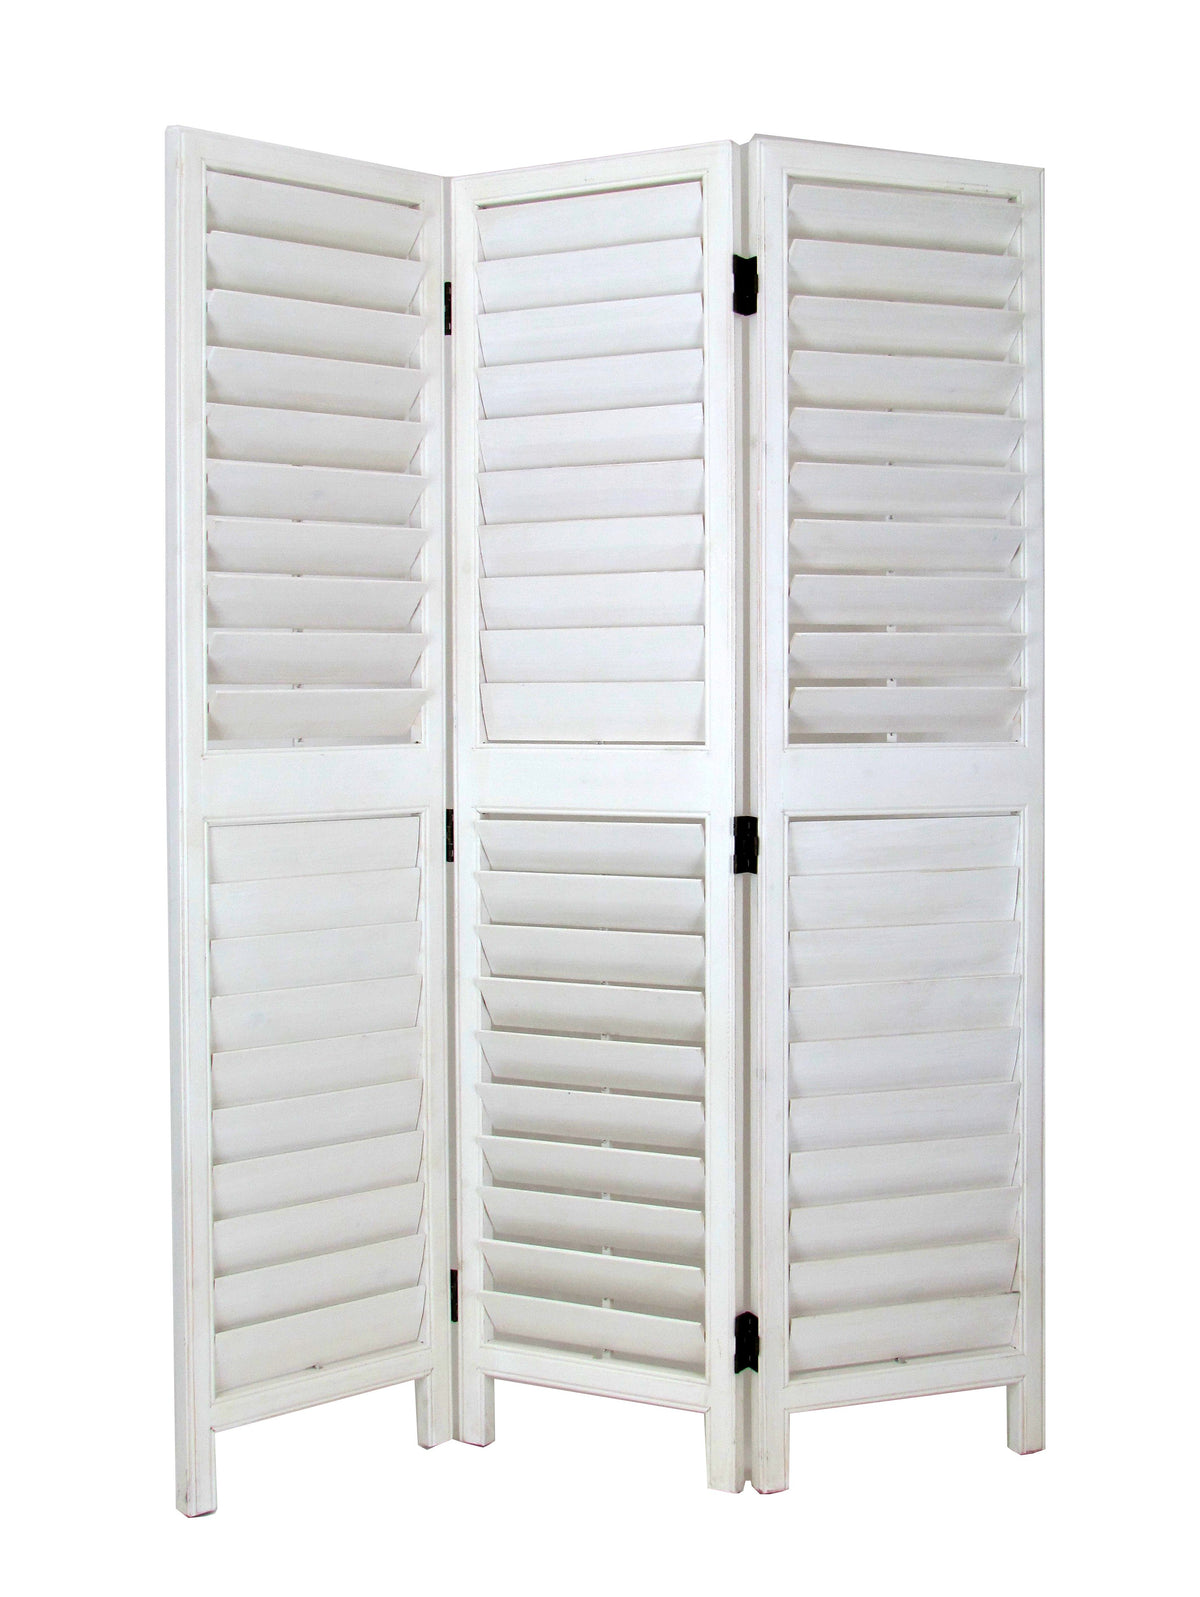 Wooden 3 Panel Room Divider with Slatted Design, White - BM213480